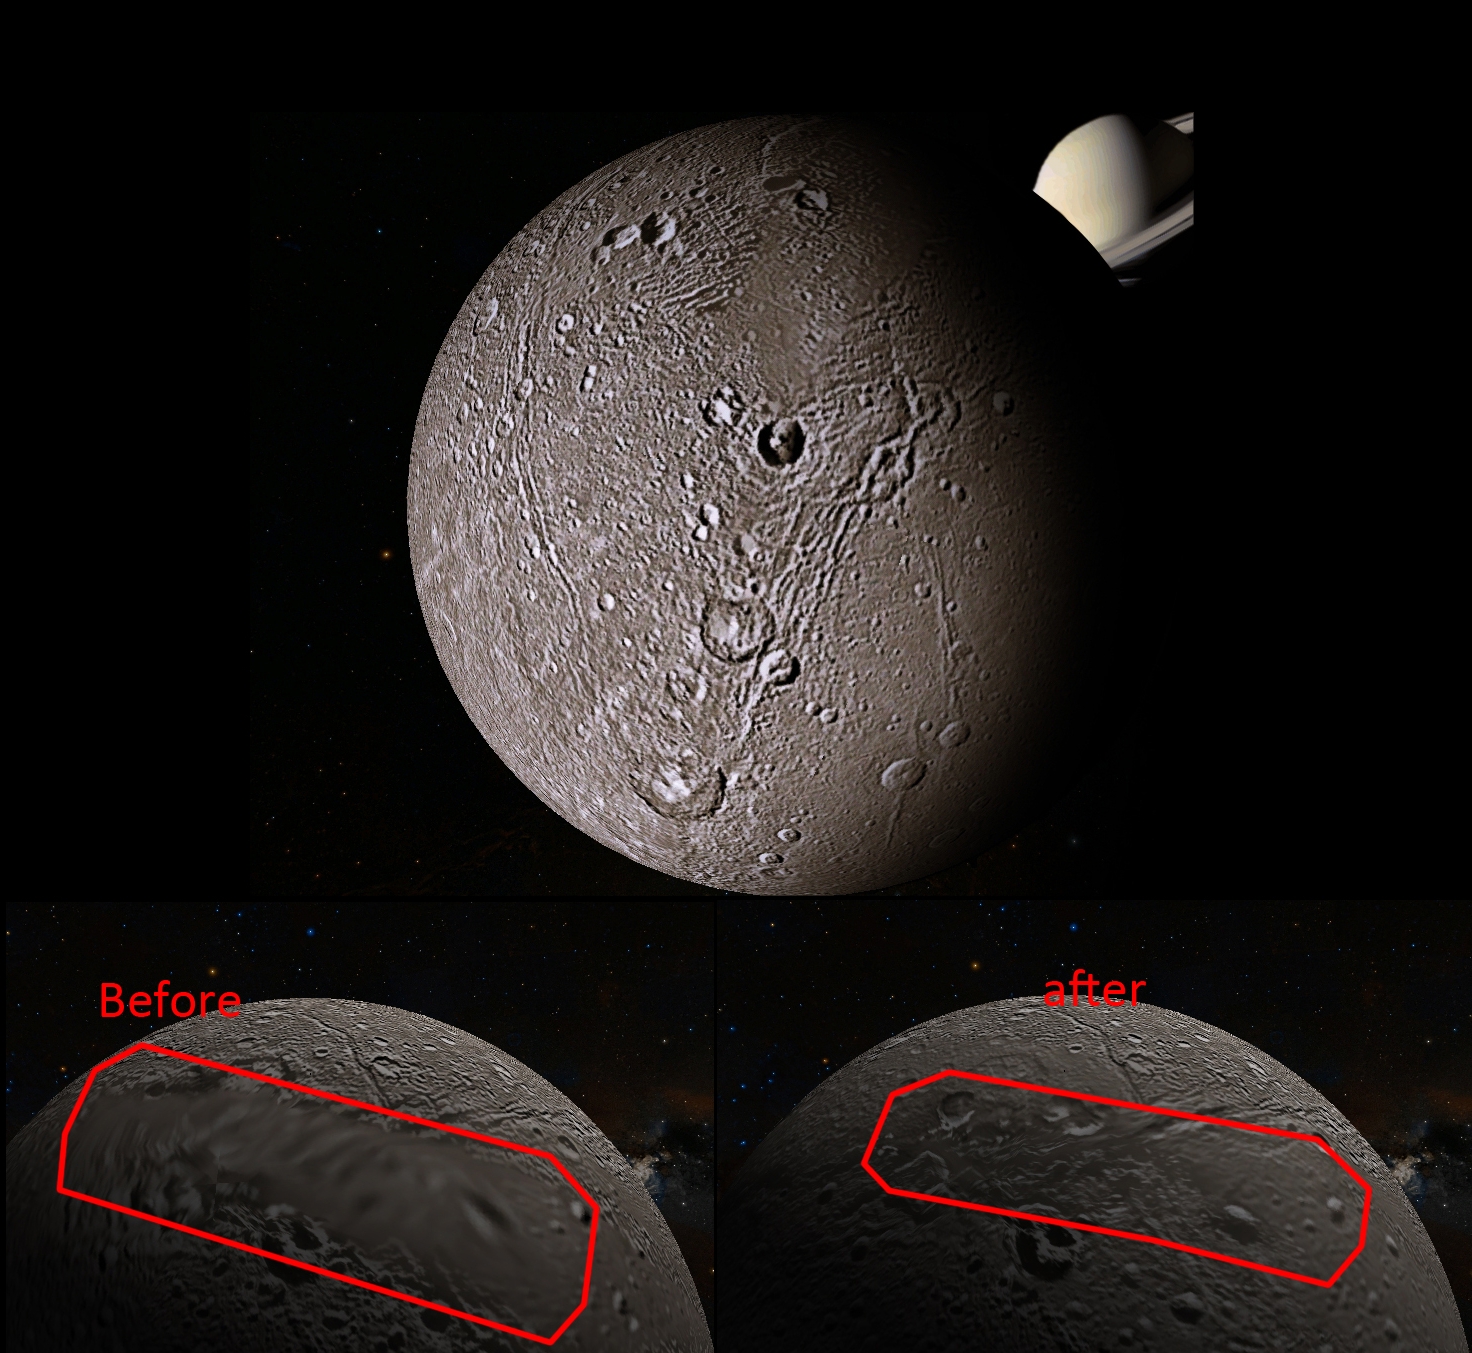 Dione.jpg